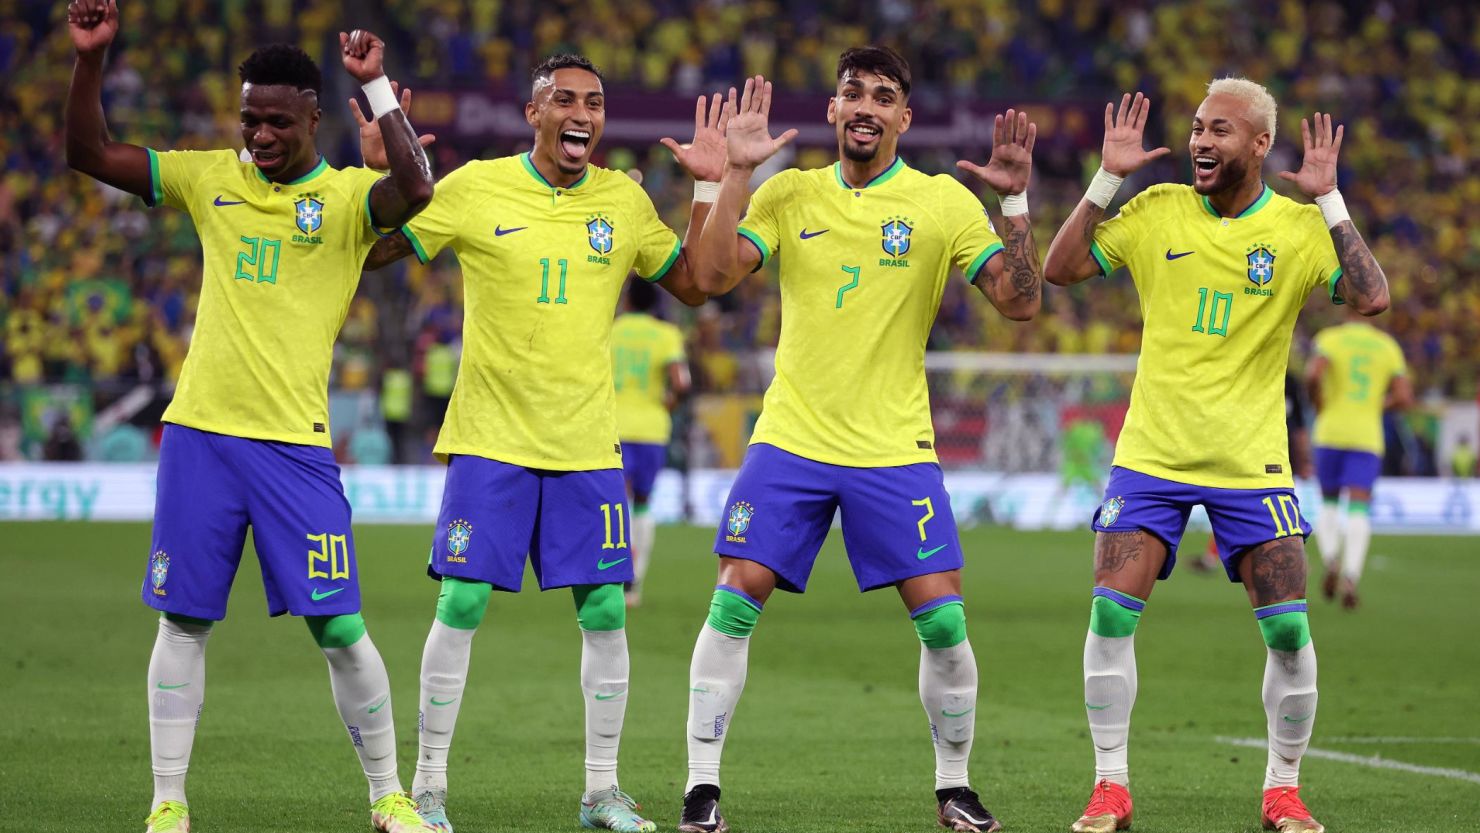 PROGRAM OVERVIEW  Brazil CT Soccer Teams